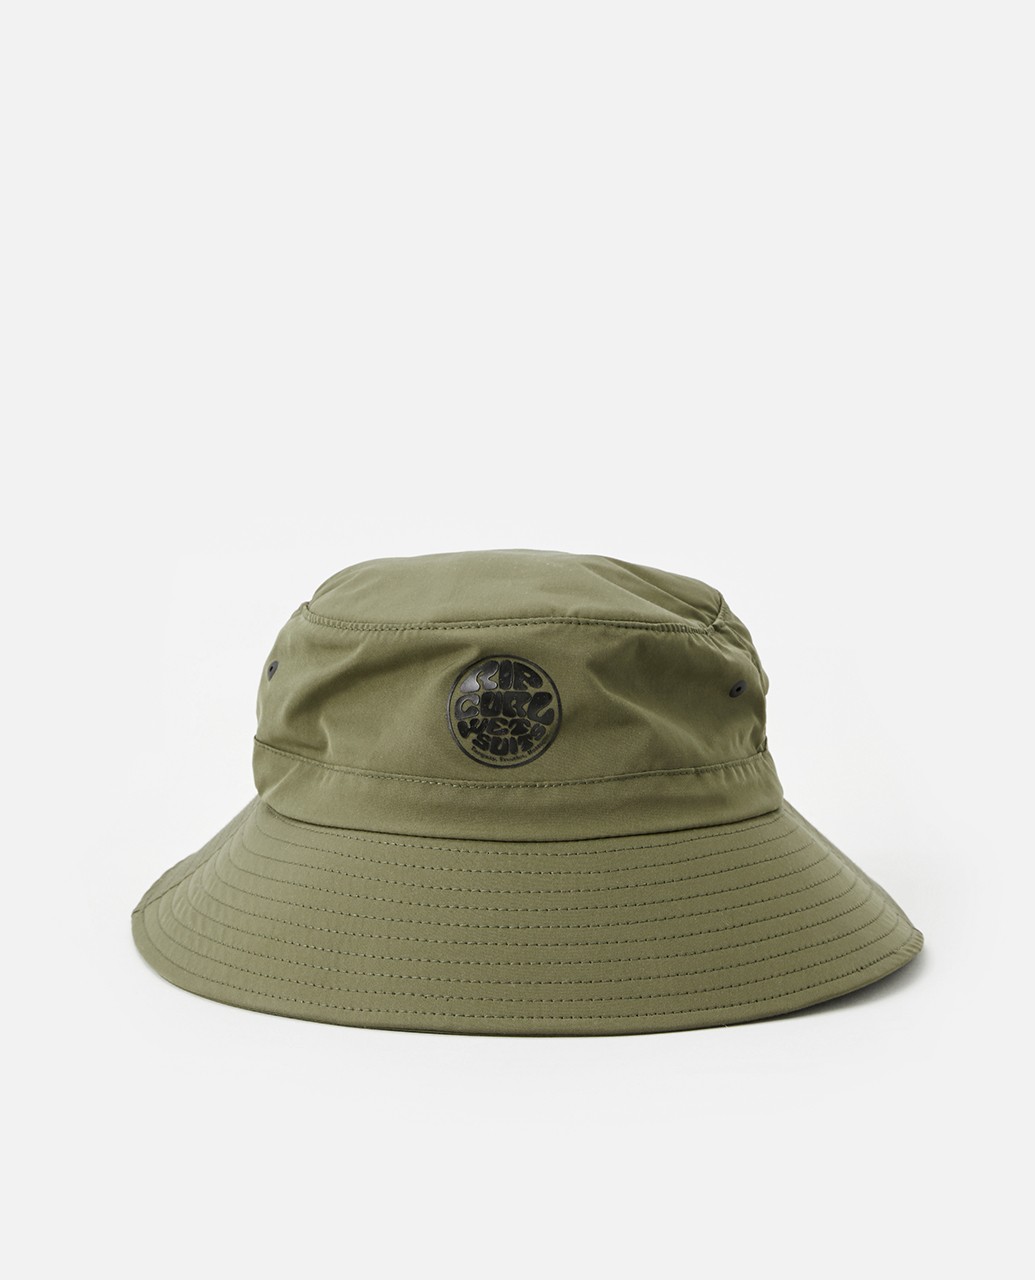 Black M discount 89% WOMEN FASHION Accessories Hat and cap Black Rip Curl hat and cap 